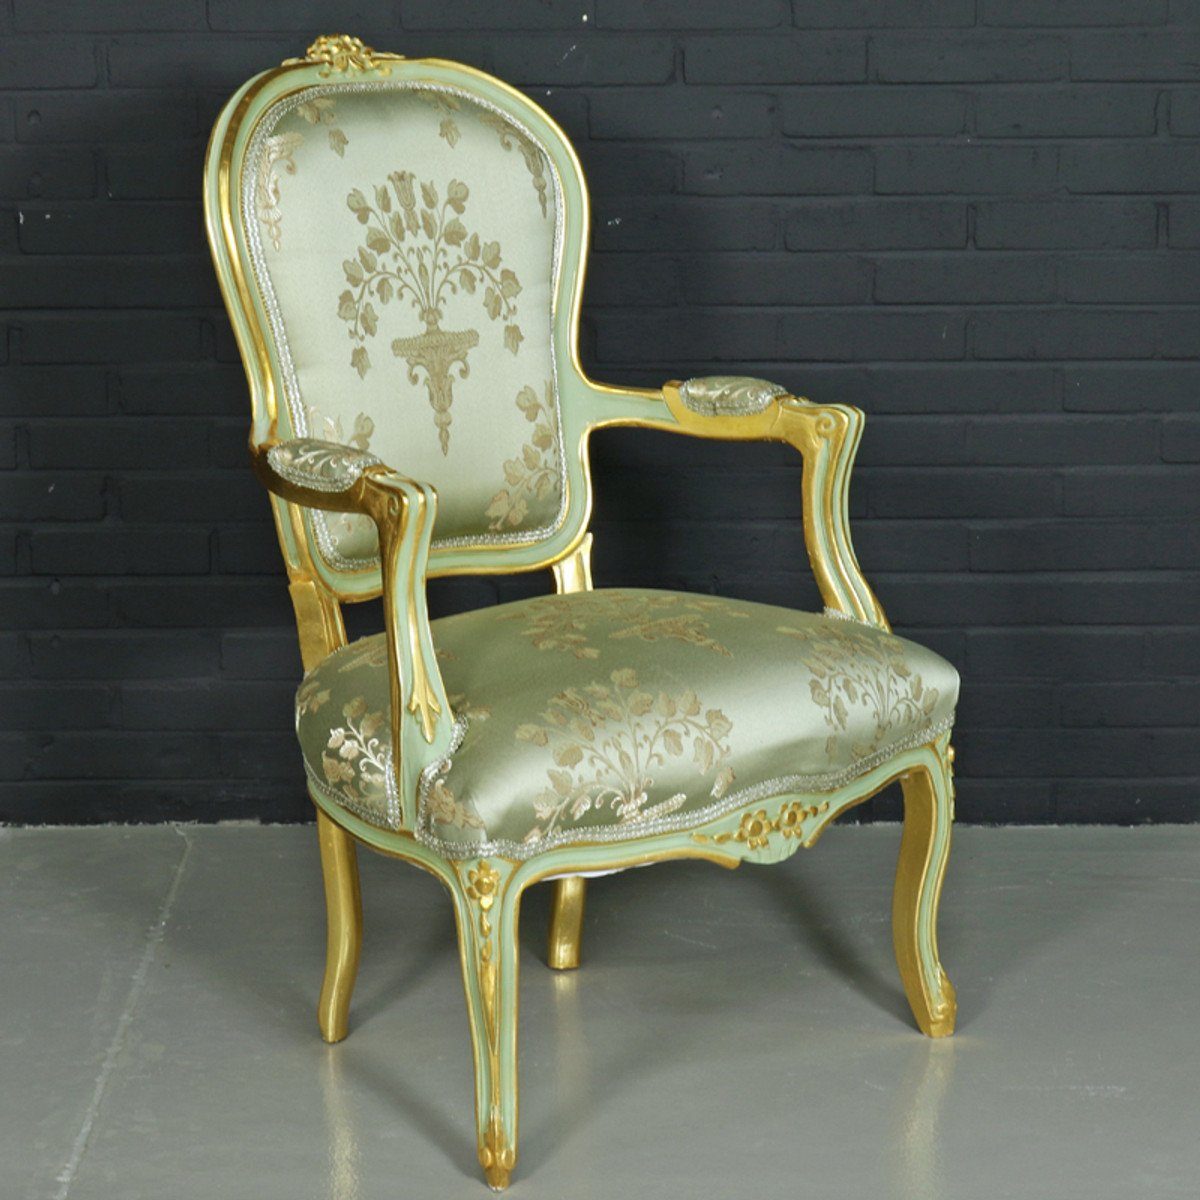 Stuhl Stuhl Salon Mod1 Armlehnen Casa "Medaillon" Gold Hellgrün - Besucherstuhl mit Antikstil / Padrino Barock